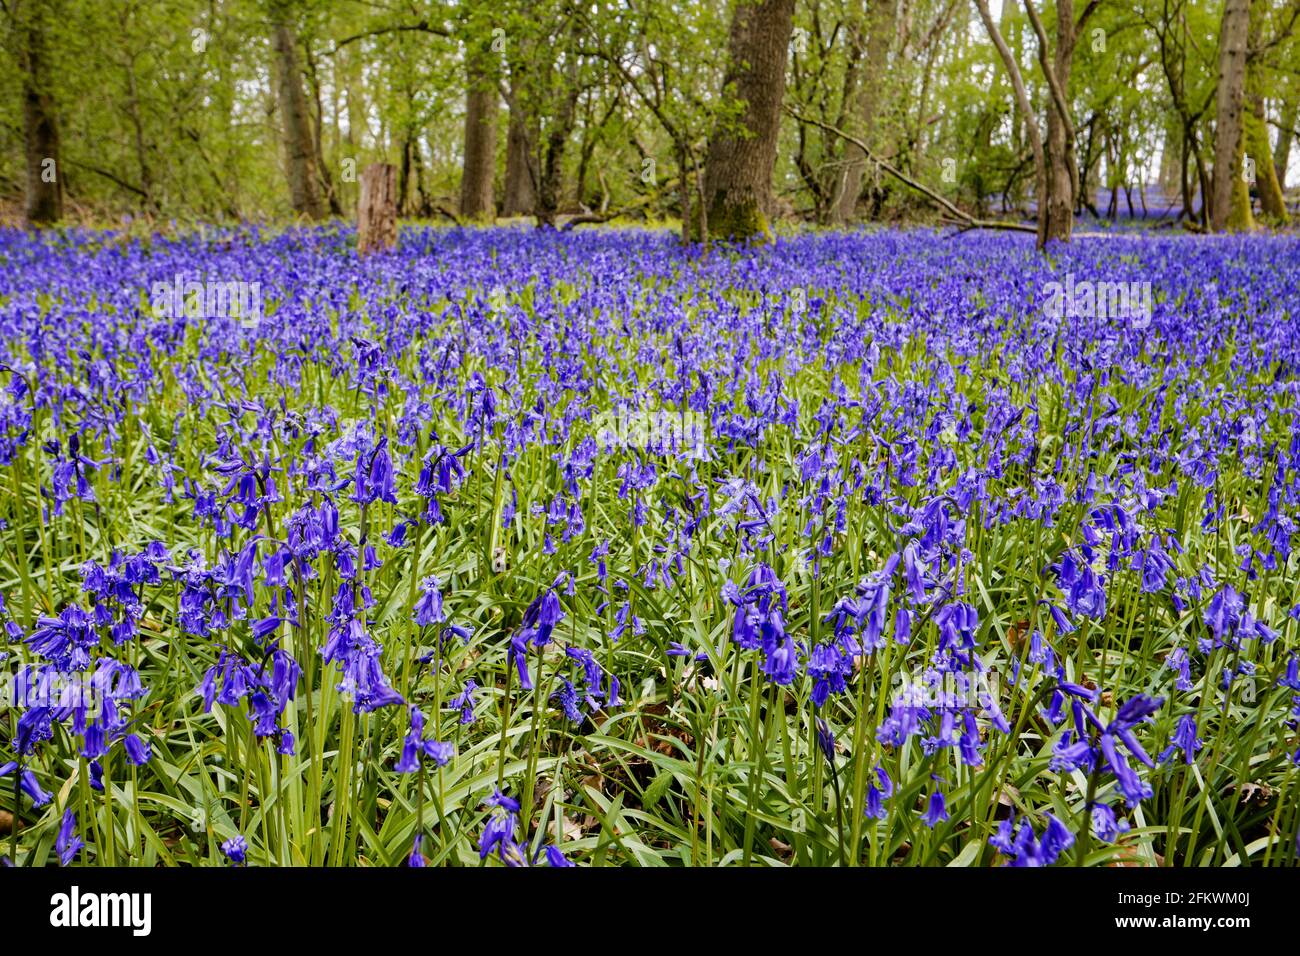 Bluebells ingleses azules (Hyacinthoides non-scripta) floreciendo en los bosques en primavera en Surrey, sudeste de Inglaterra Foto de stock